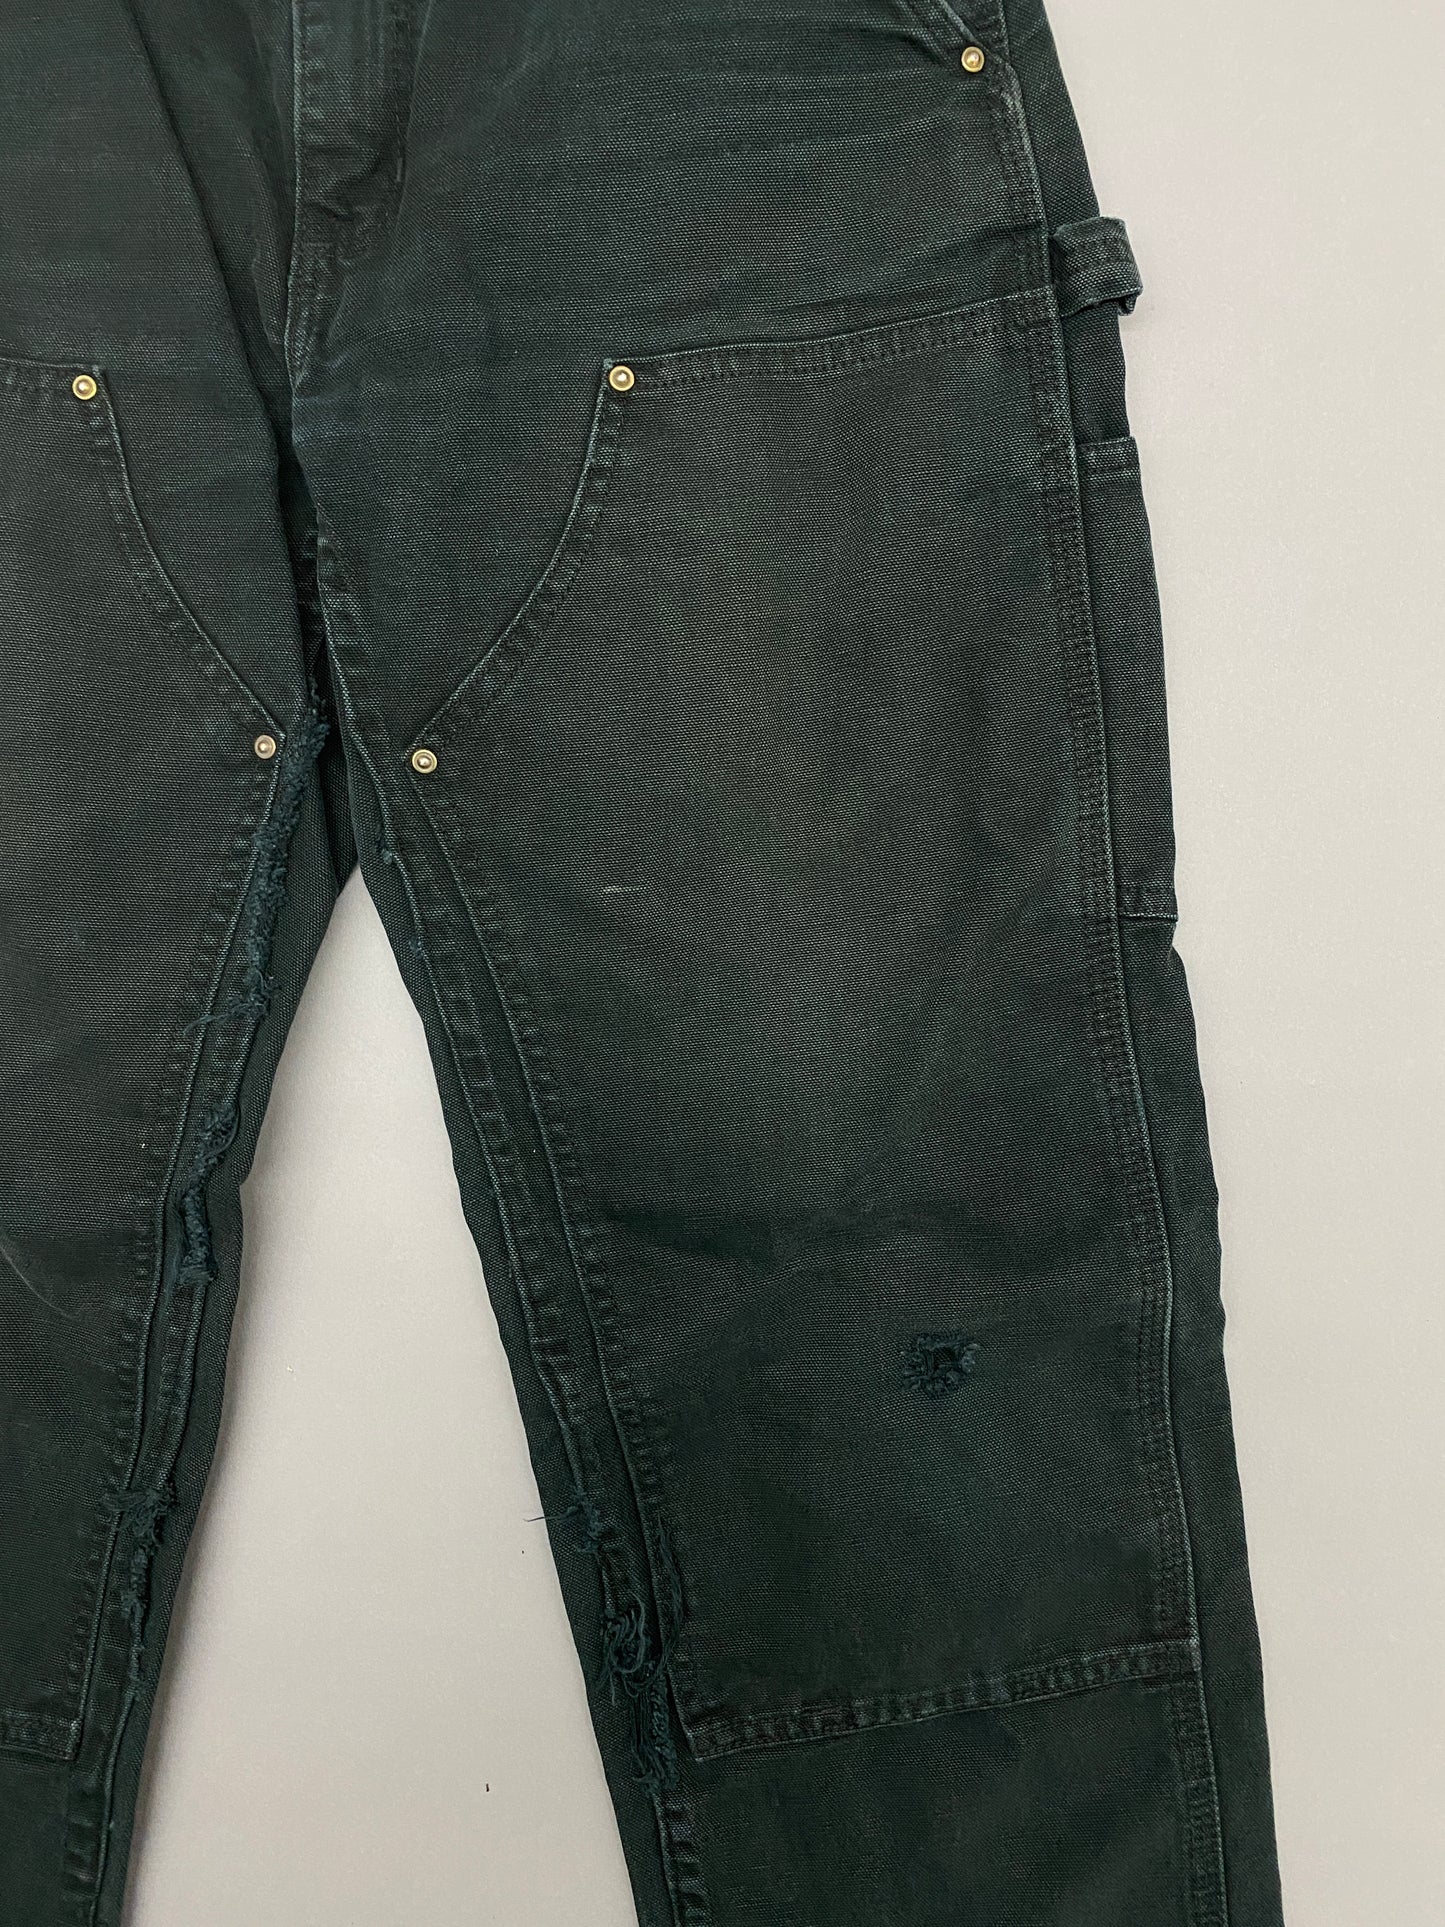 Double Knee Carhartt Jeans Vintage - 30 x 30